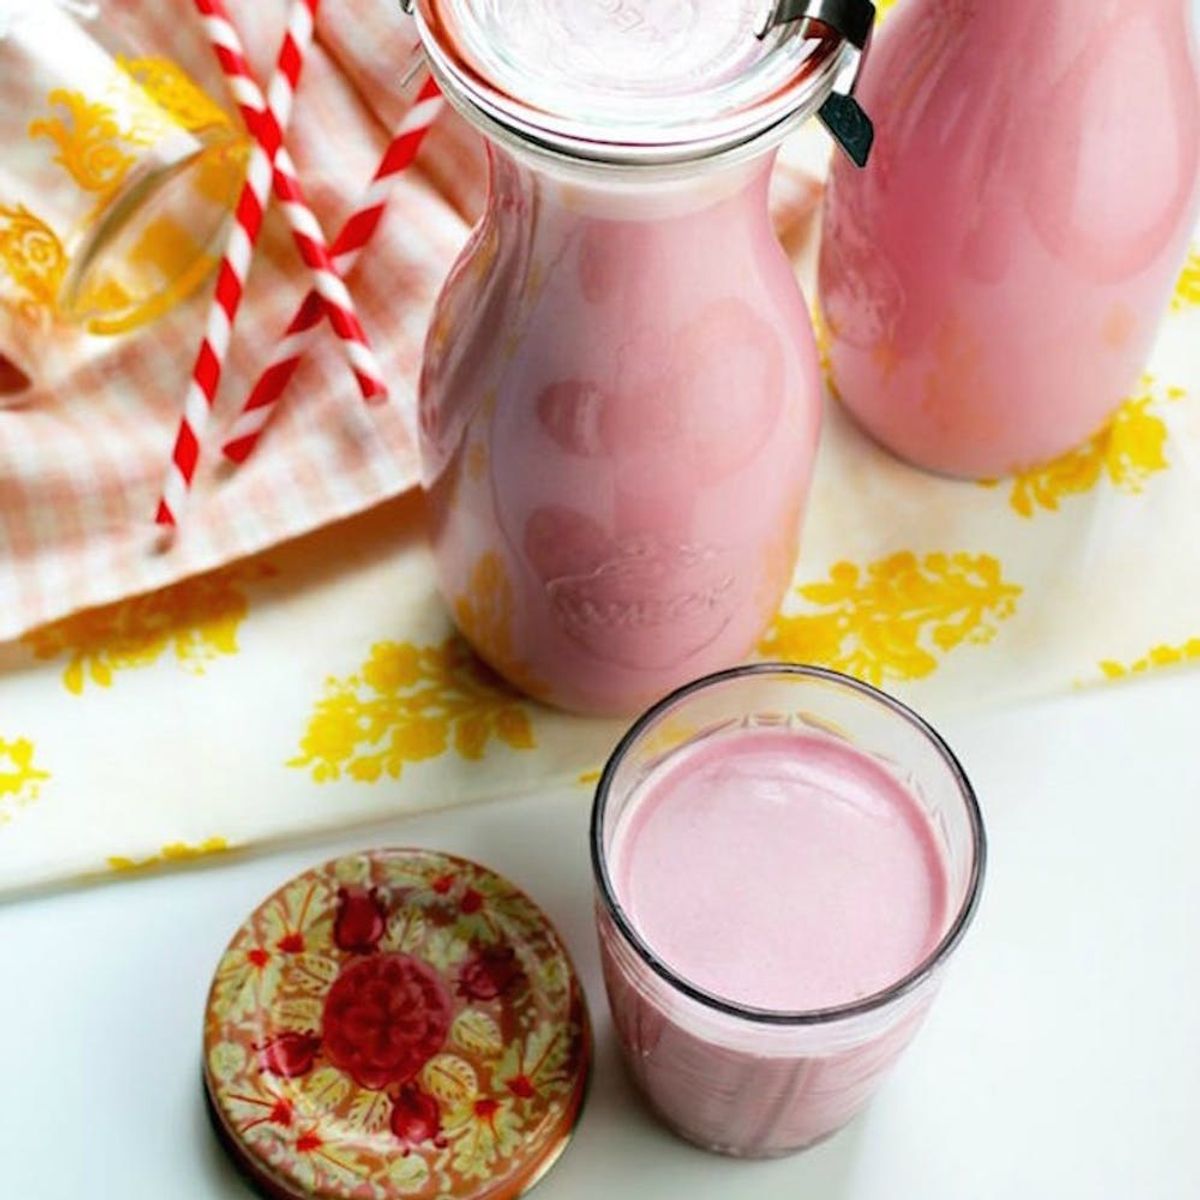 14 Alternative Milk Recipes to Make at Home Today